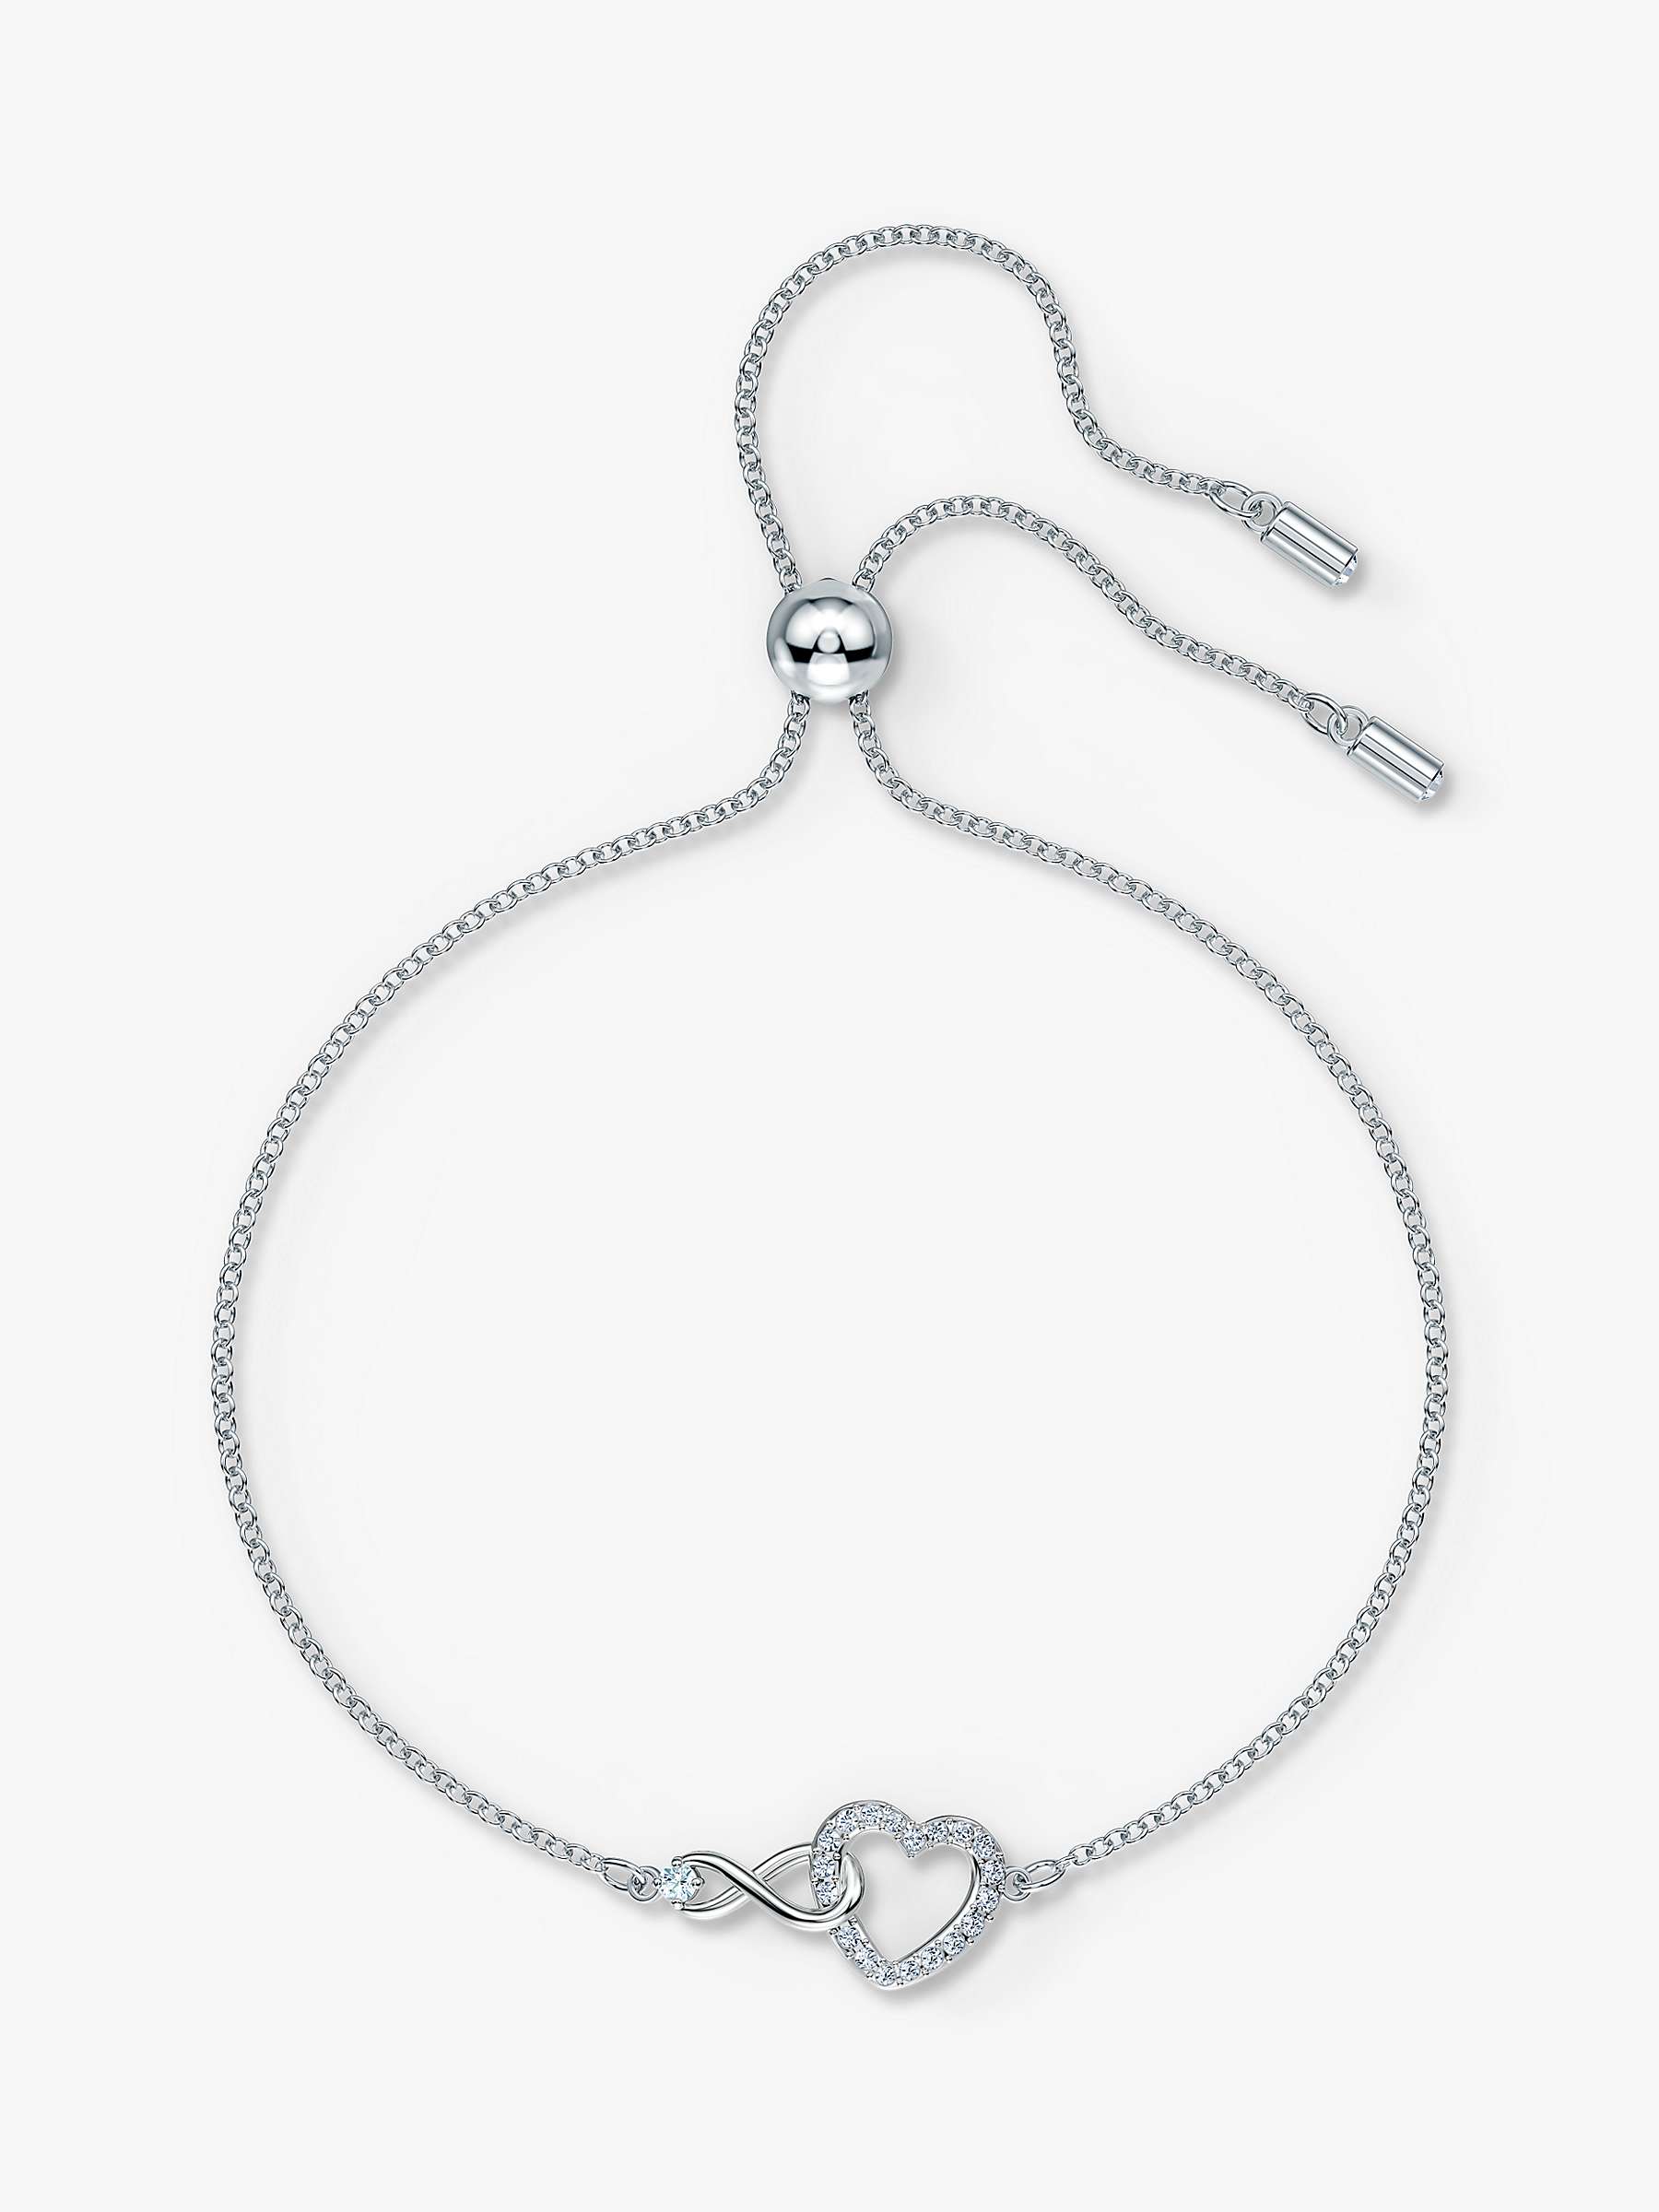 Silver Infinity Design Bracelet Love Heart Chain Bracelet Bangle Jewelry Decor